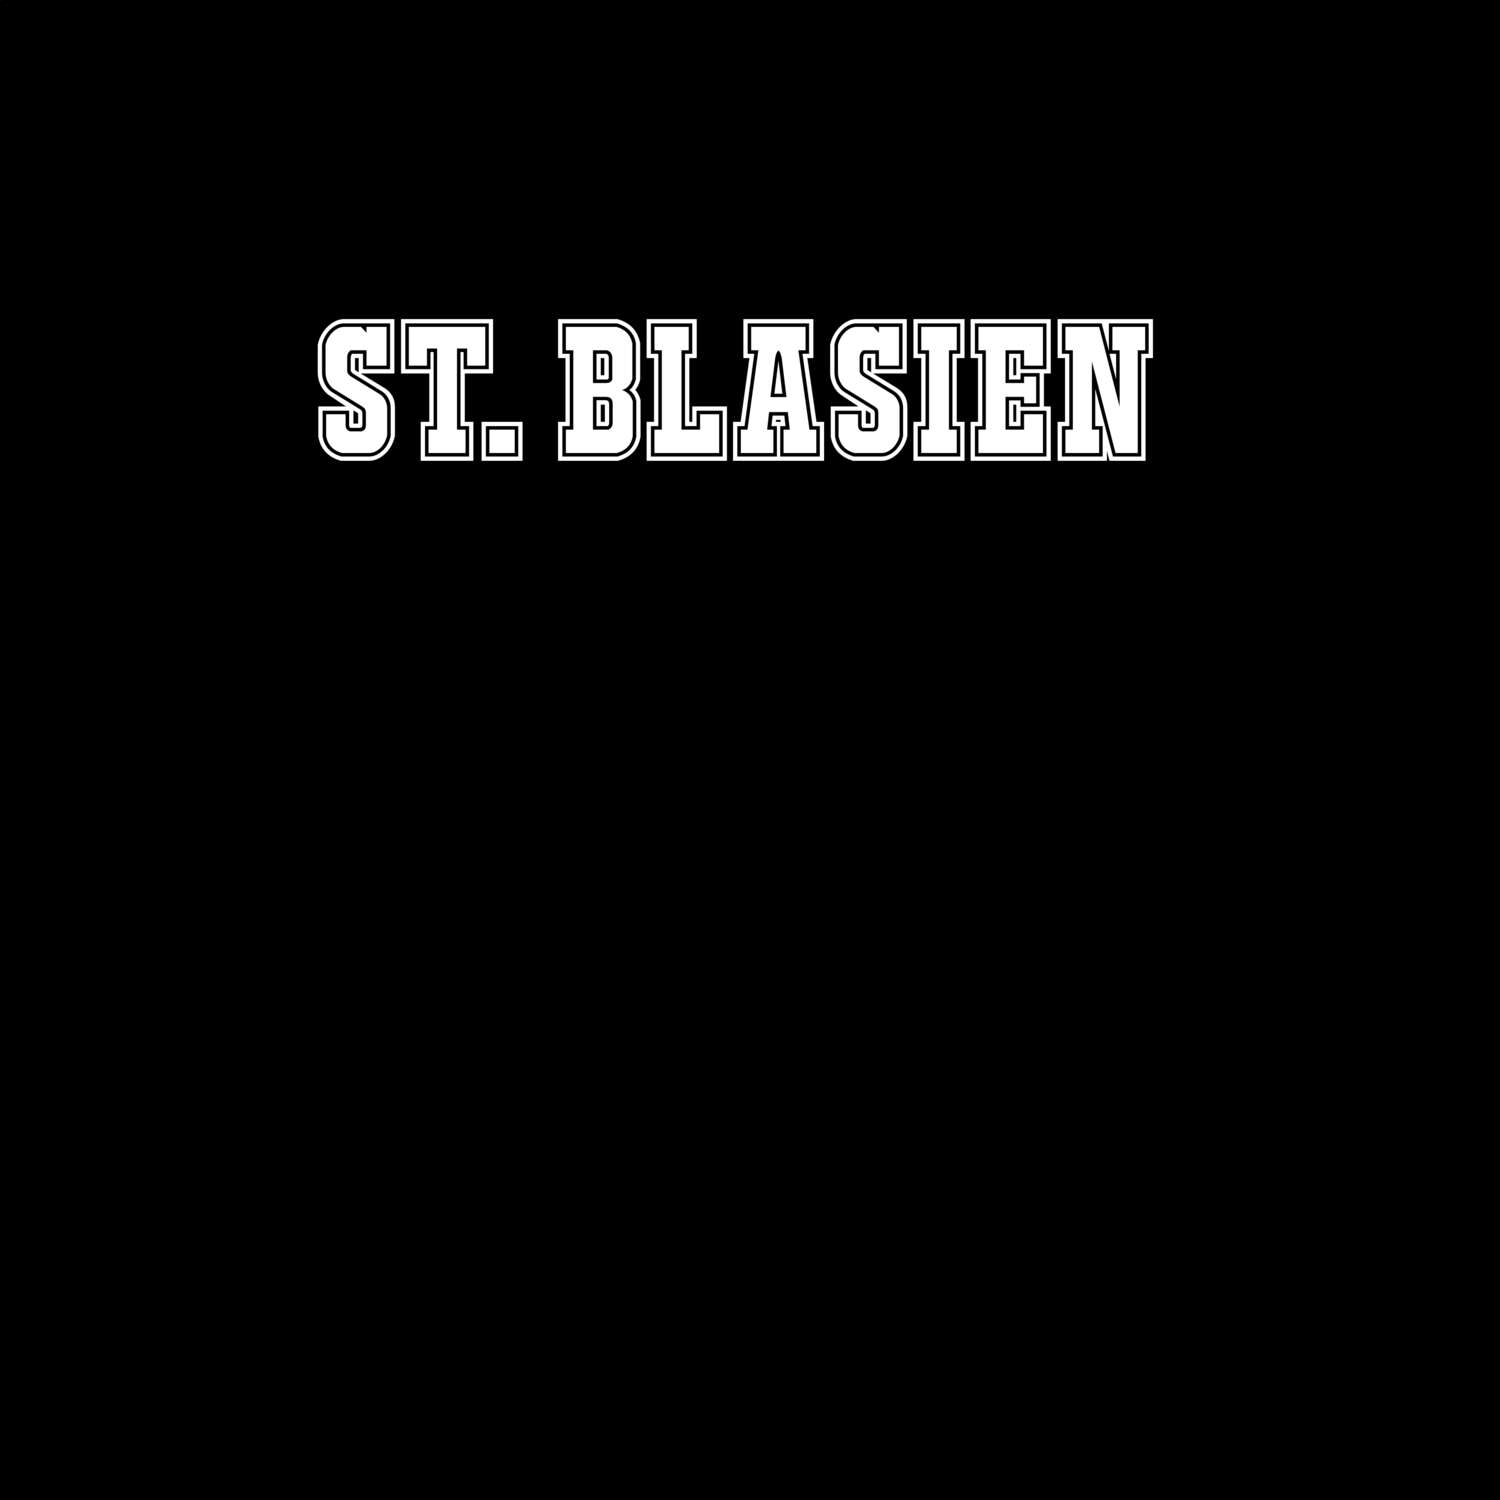 St. Blasien T-Shirt »Classic«